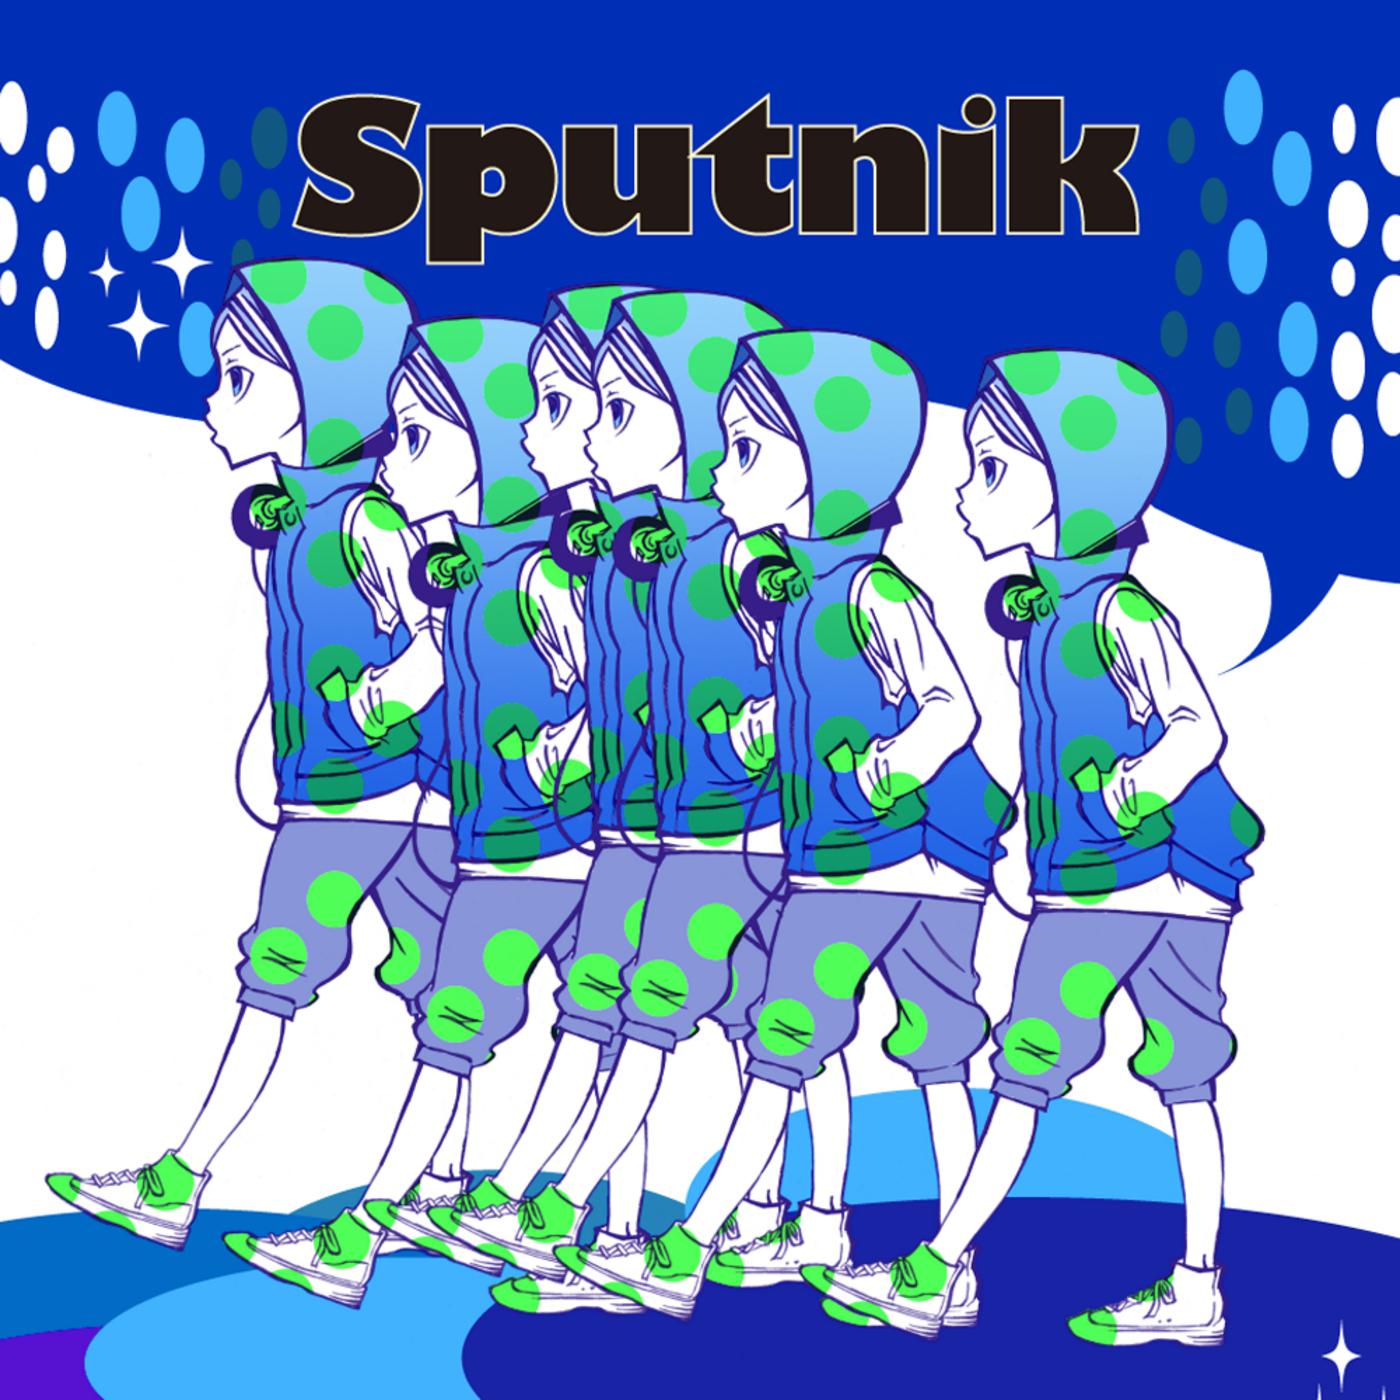 Sputnik - It's so